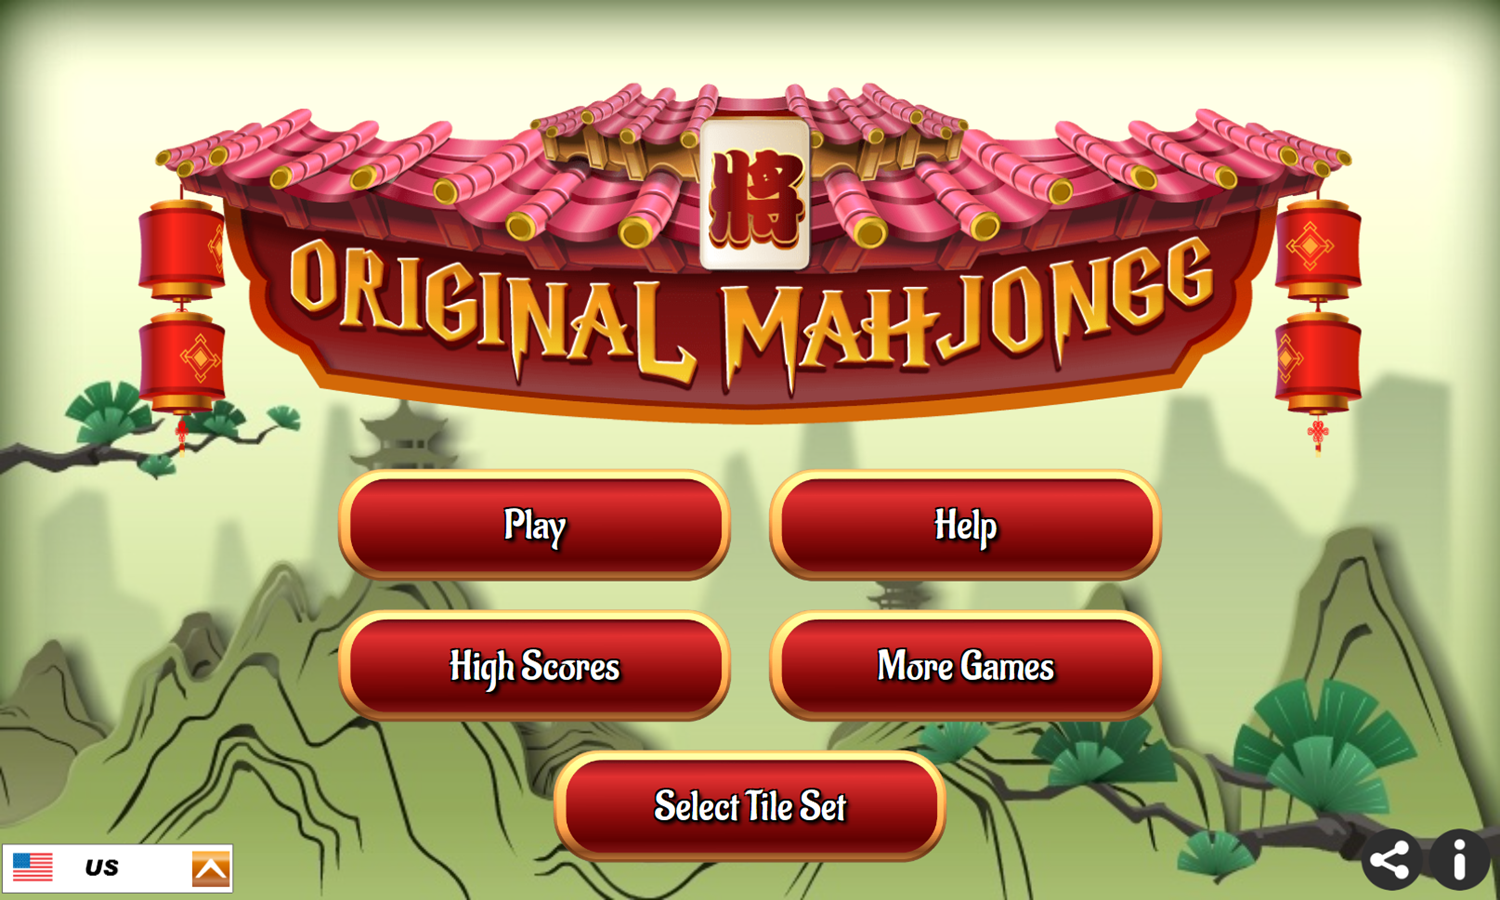 Original Mahjongg Game Welcome Screen Screenshot.